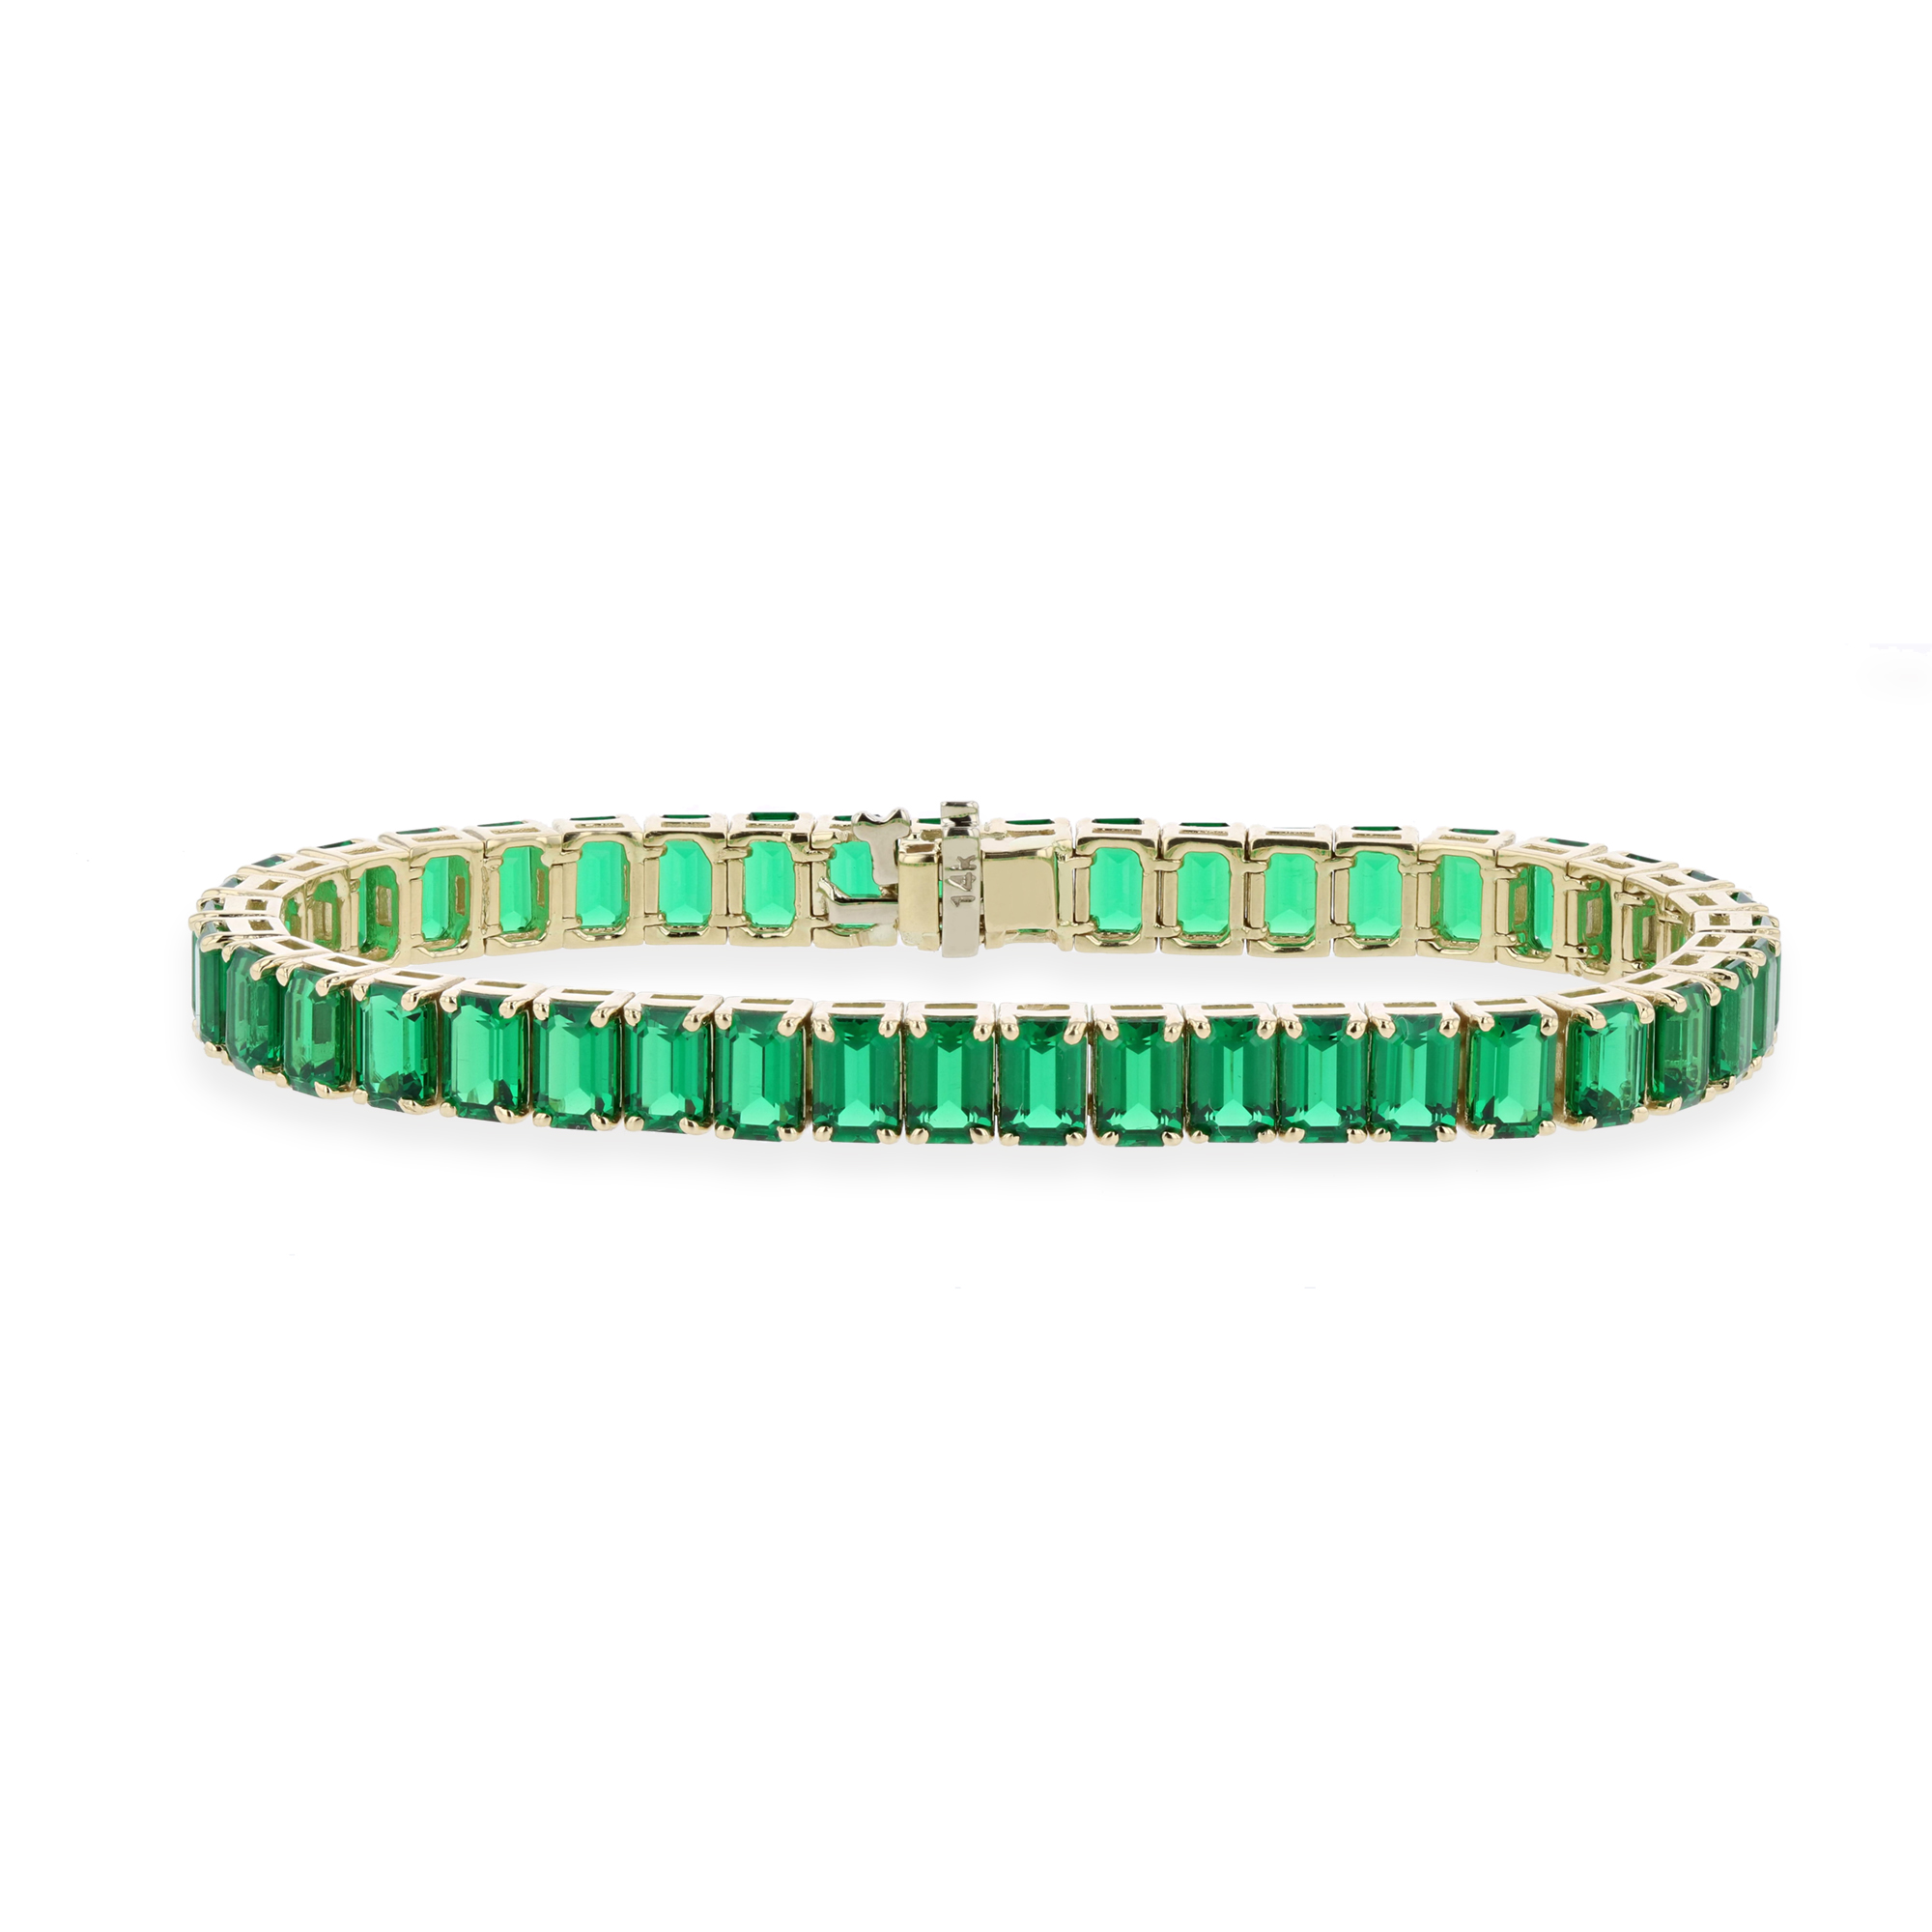 View 20ctw Mano Crystal Emerald Cut Tennis Bracelet in 14k Gold